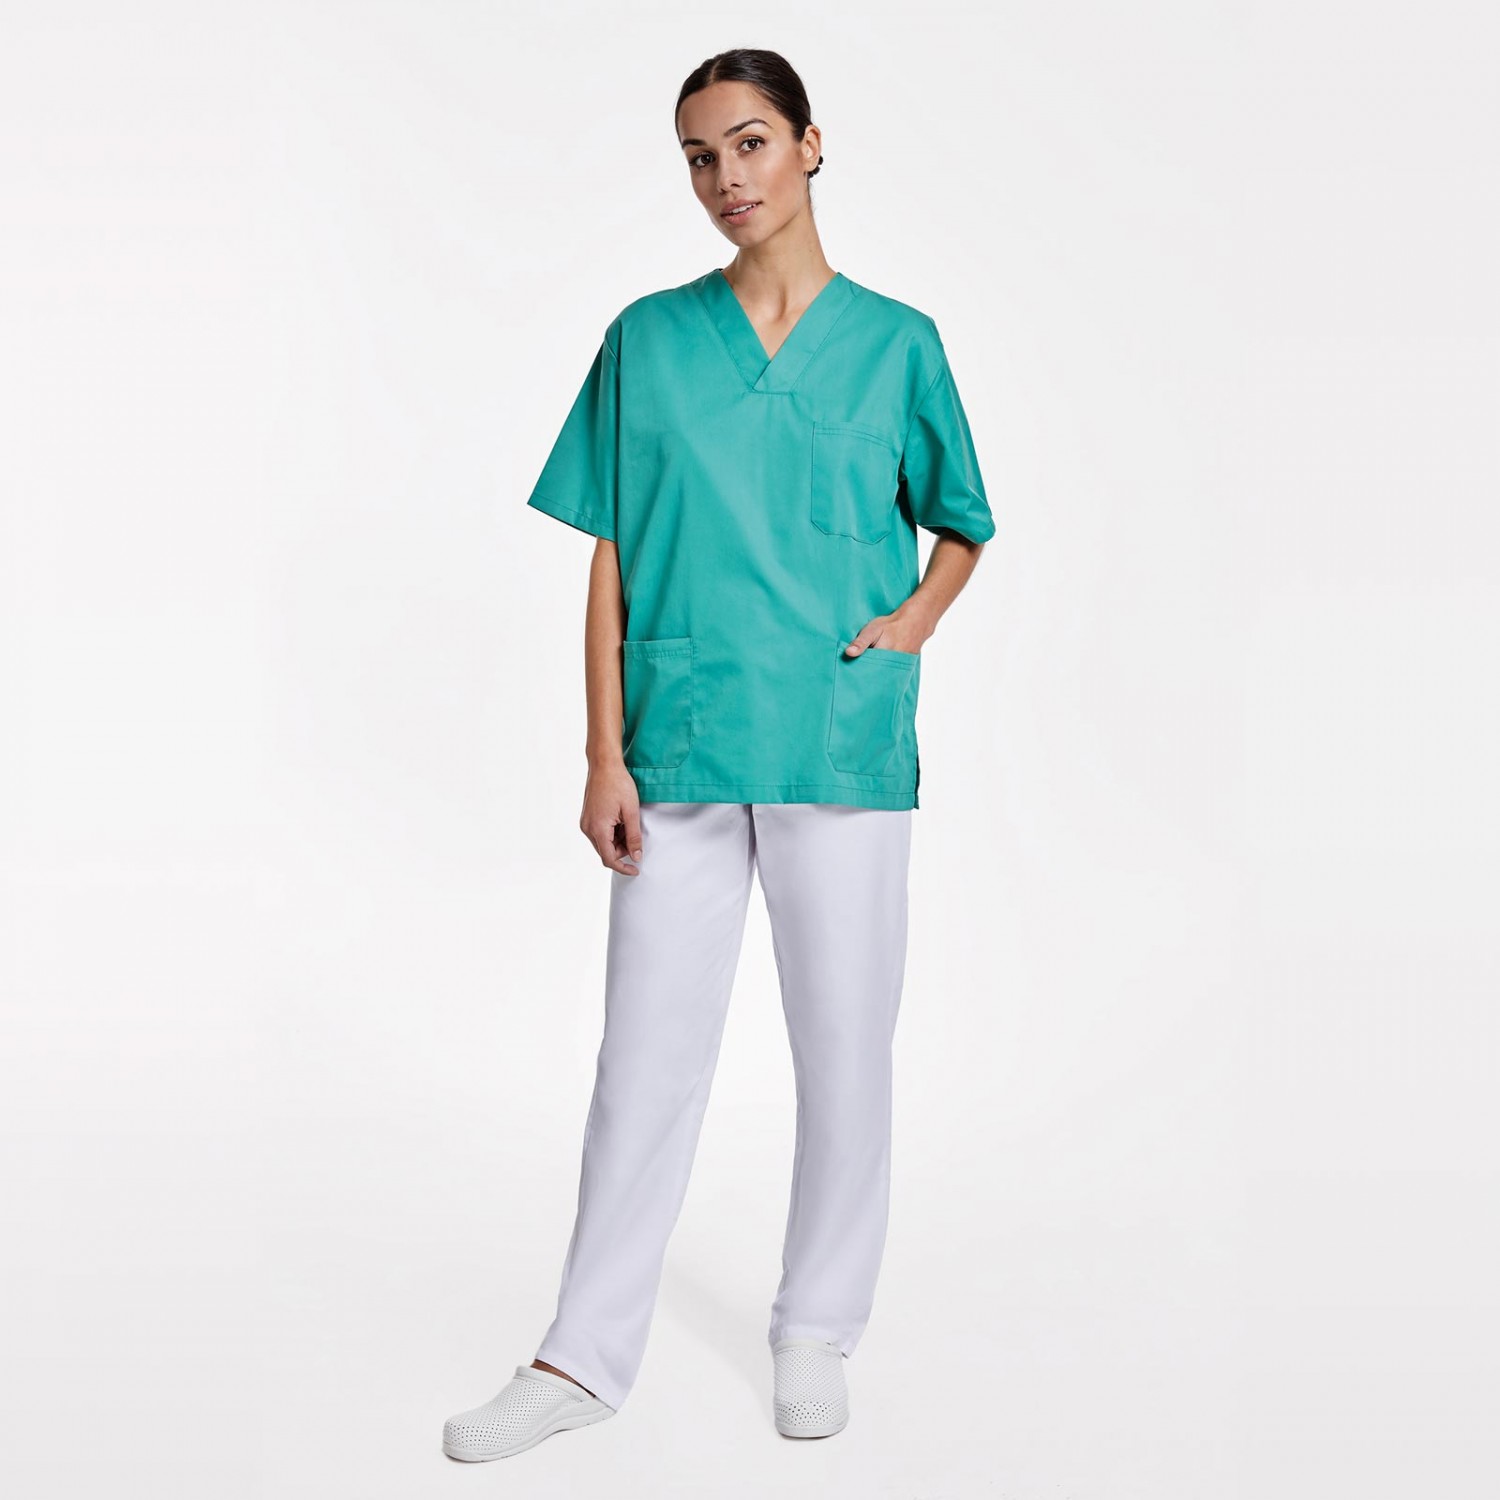 2. Foto Schlupfkasack Medizin Pflege Unisex Hemd Jacke (Farbe: OP-grün Größe:  L)